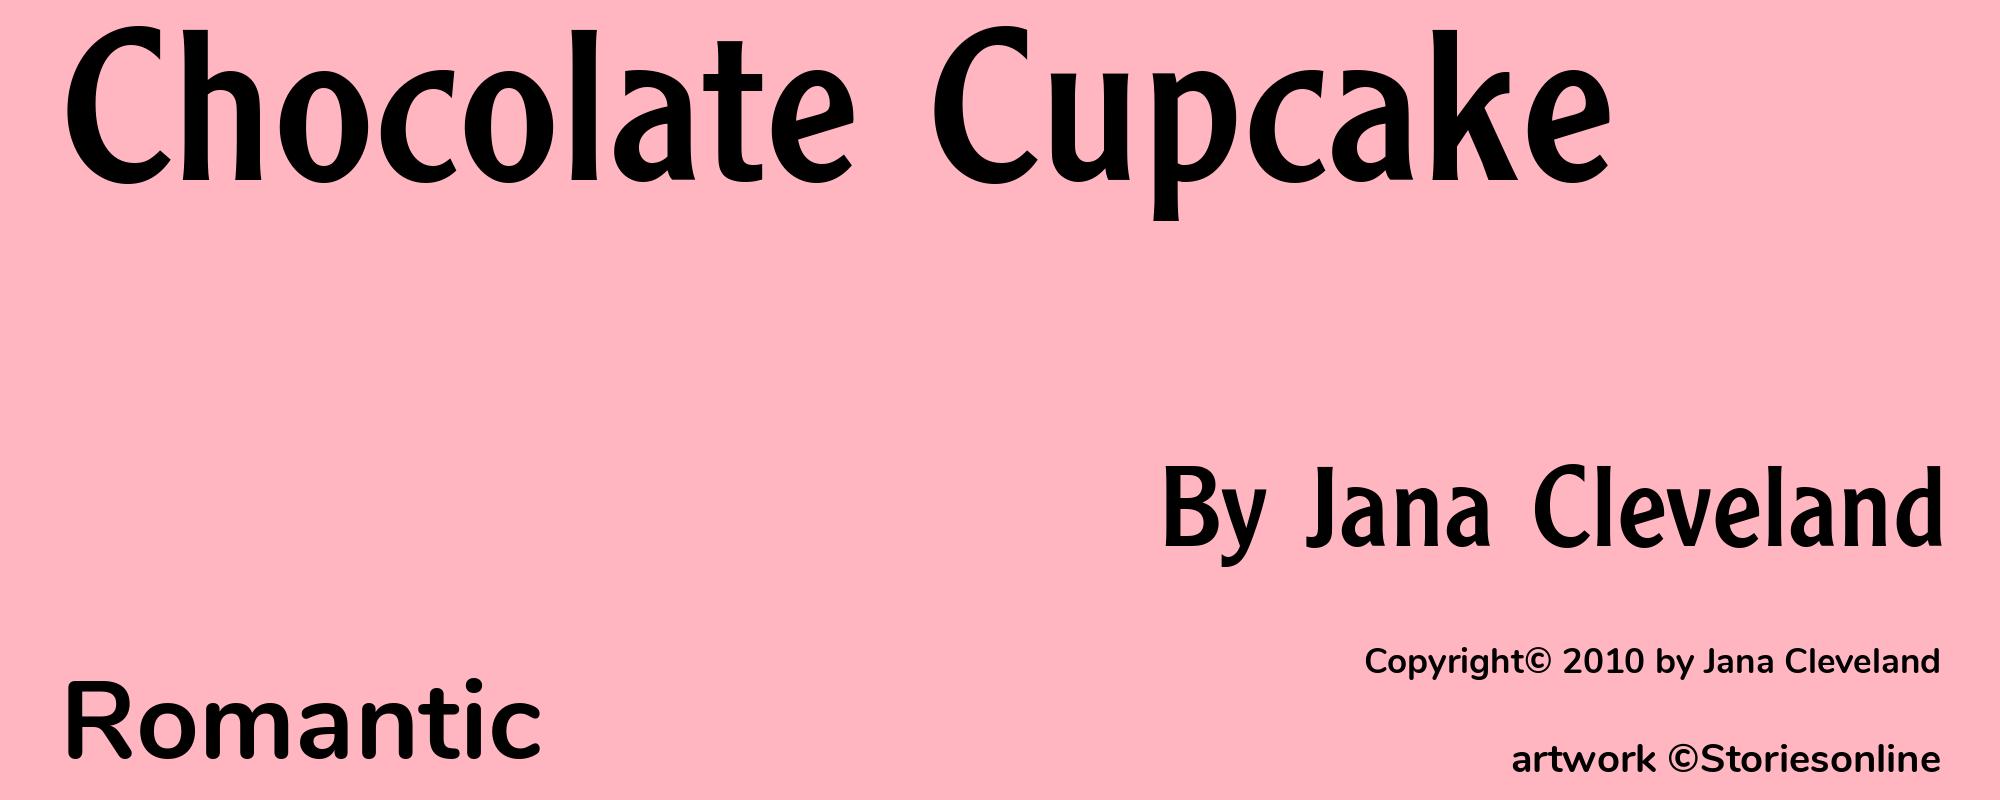 Chocolate Cupcake - Cover